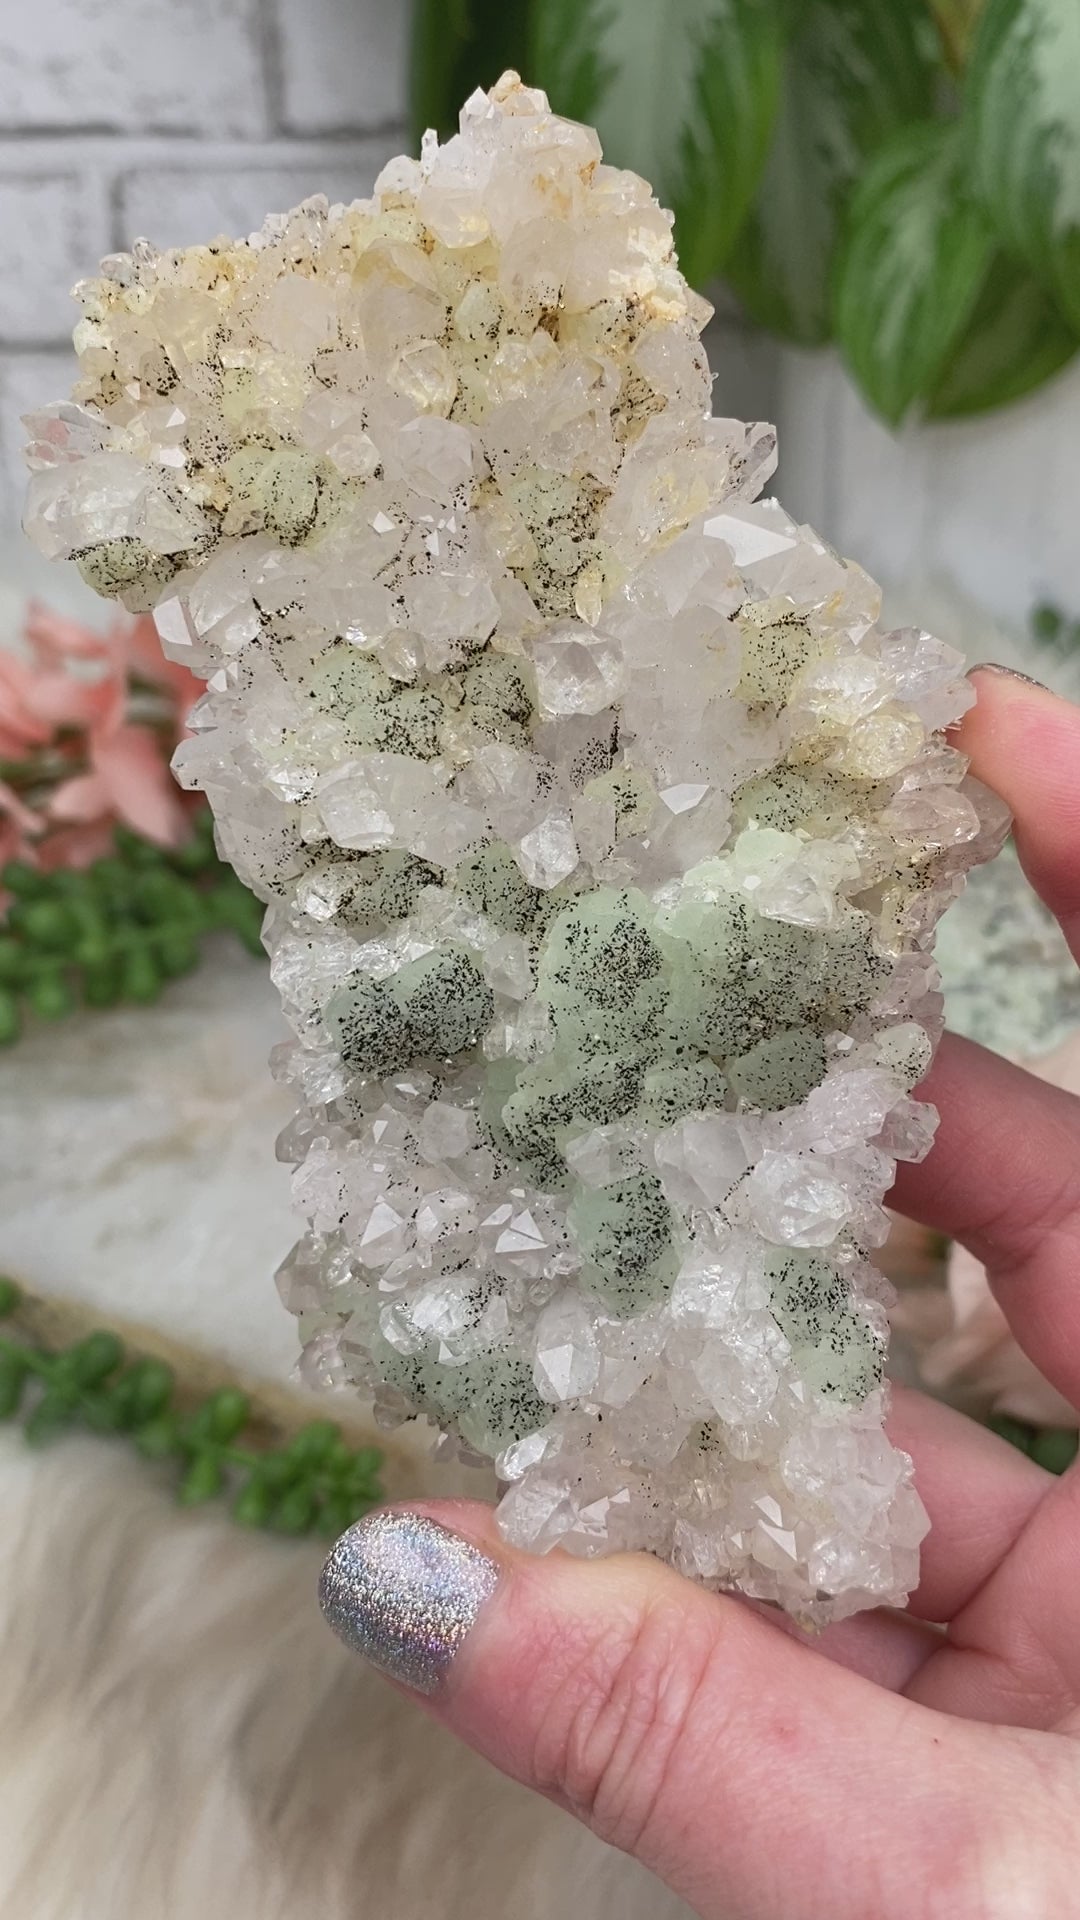 green-epidote-babingtonite-quartz